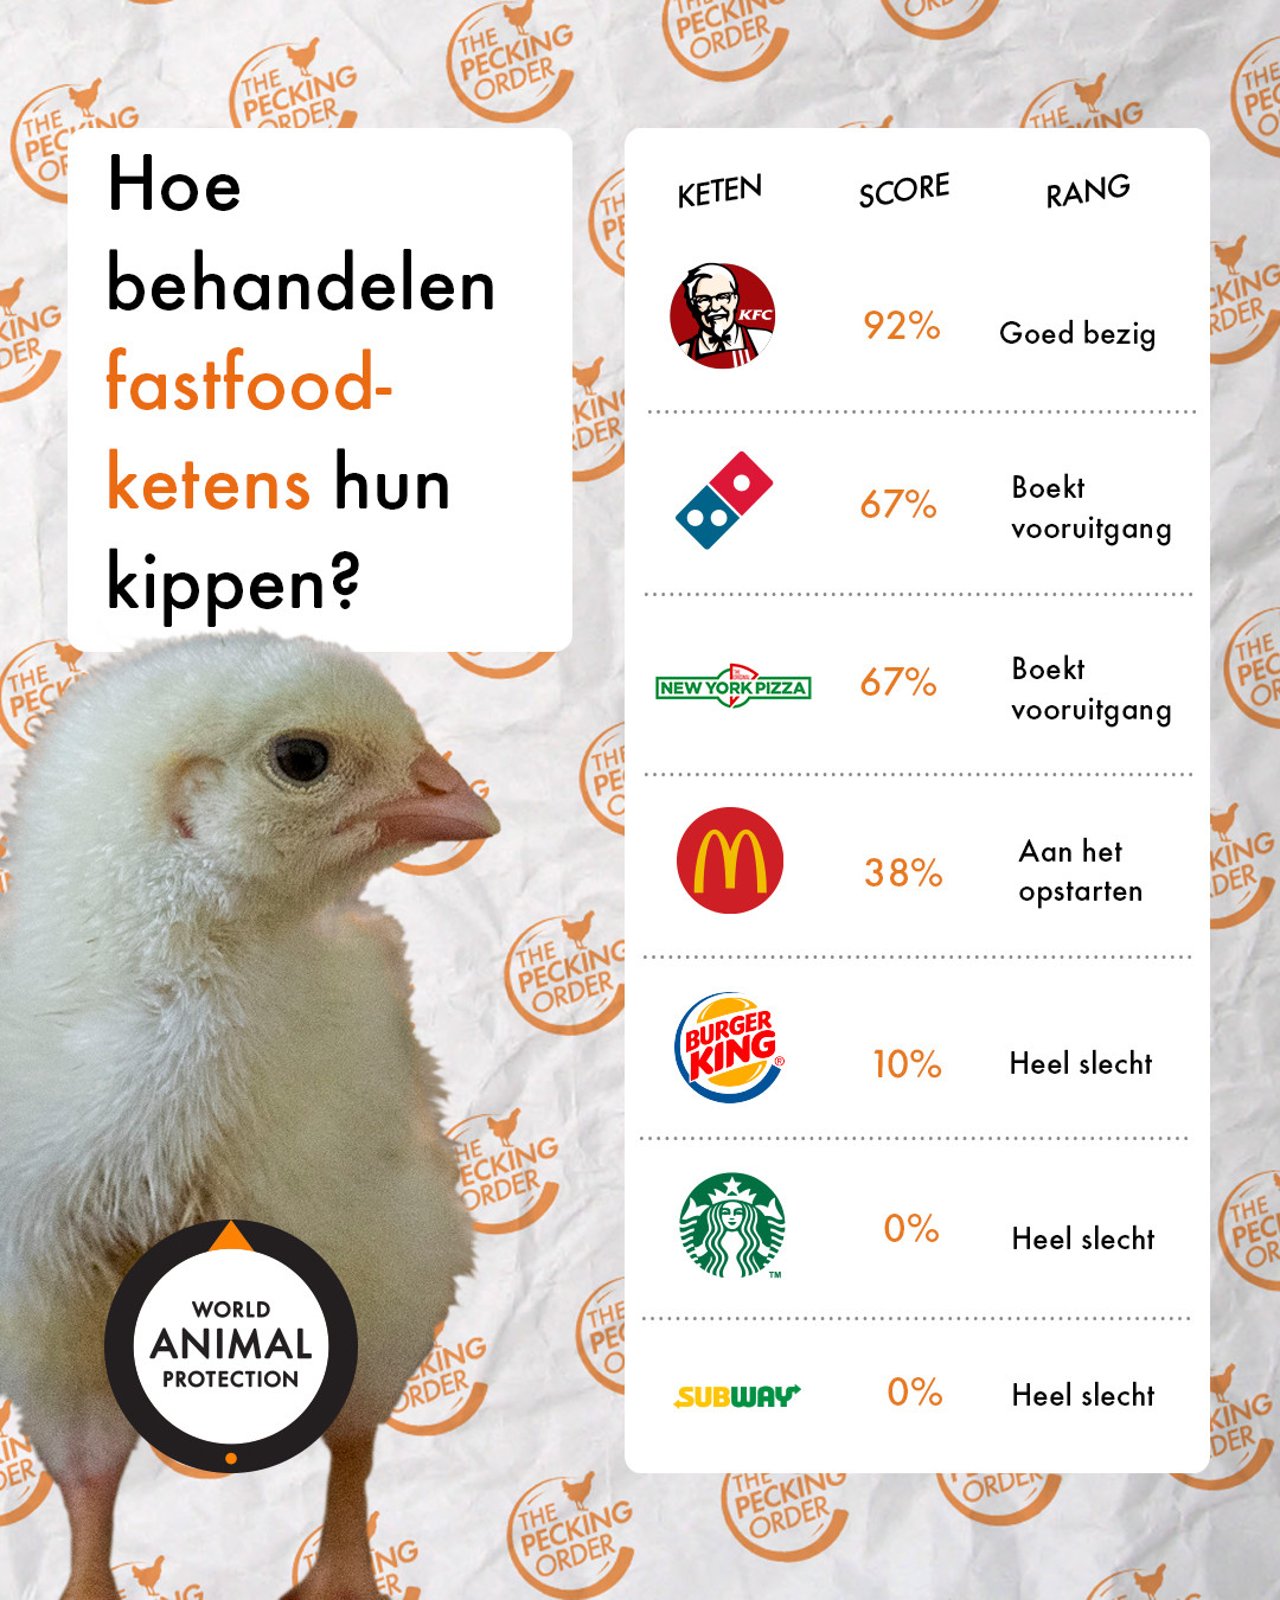 The Pecking Order ranking Nederland